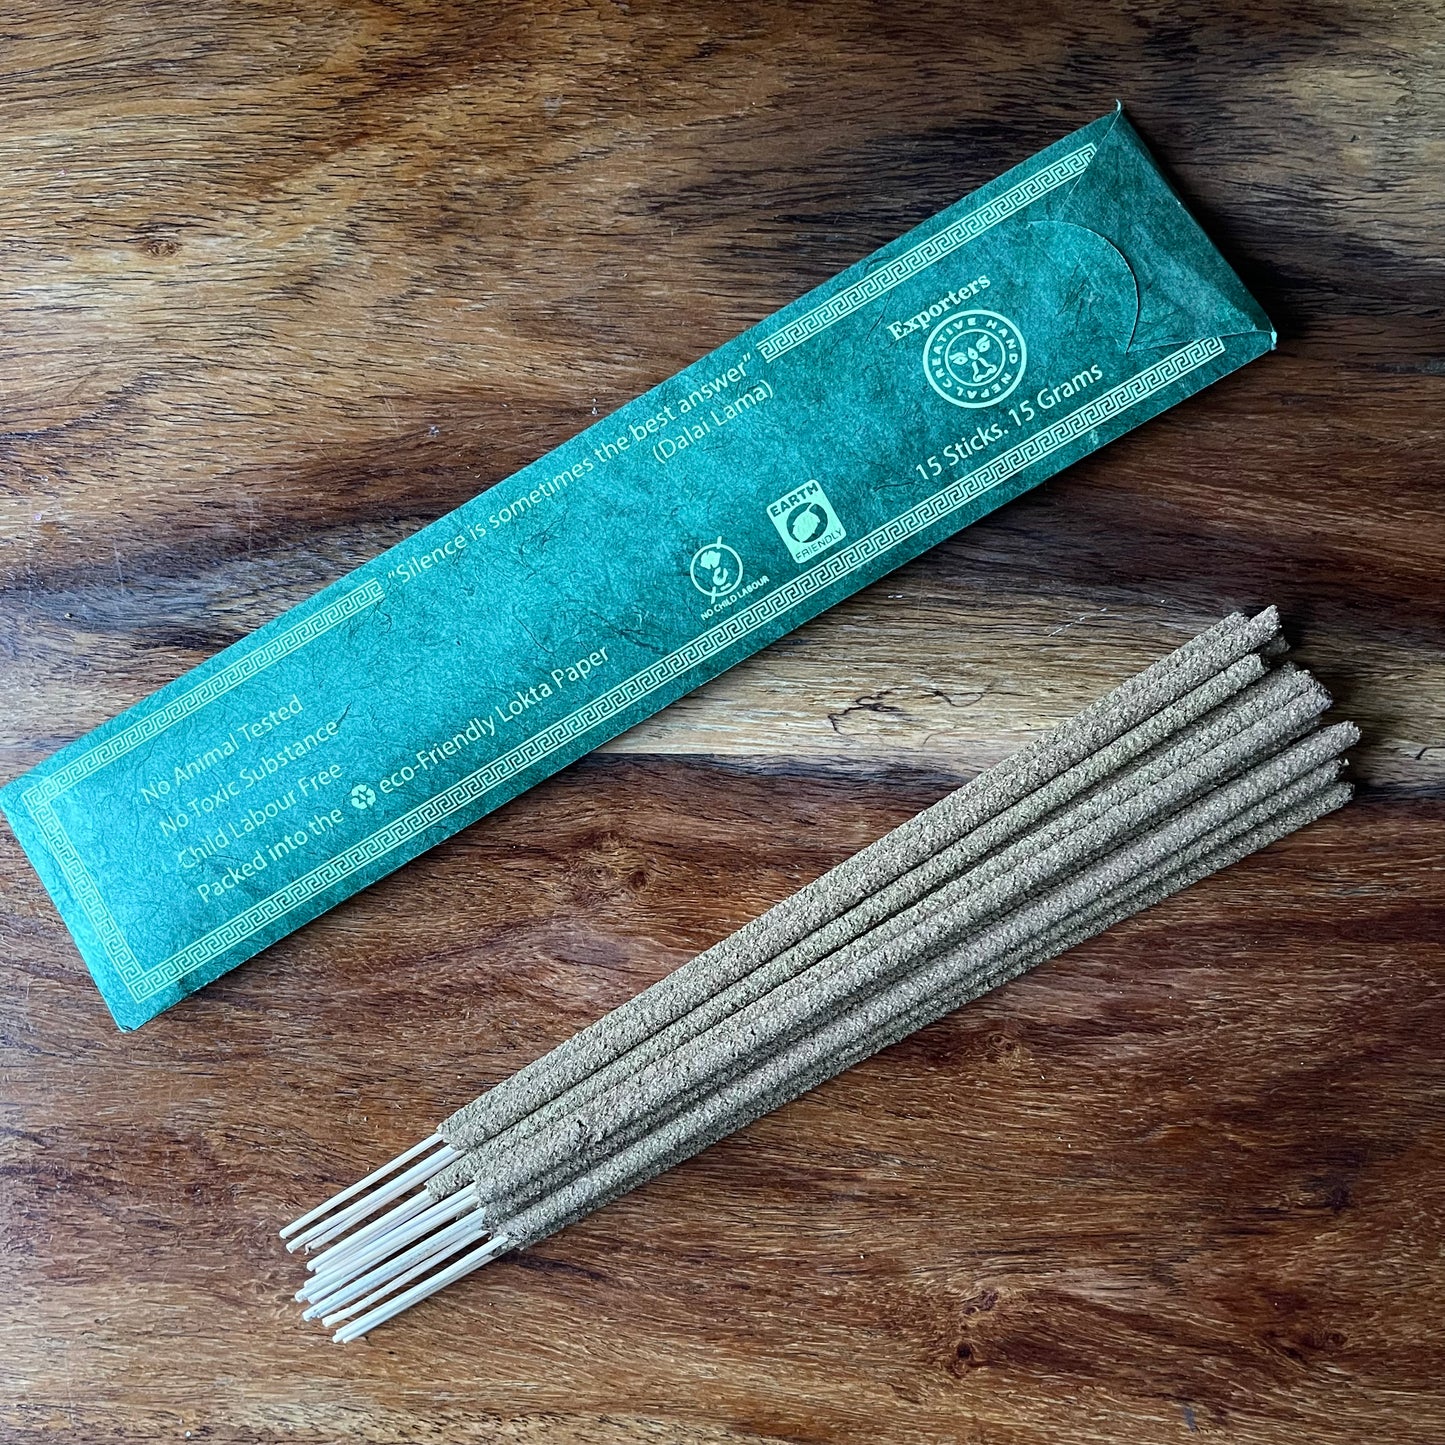 Juniper Berry Natural Tibetan Incense sticks